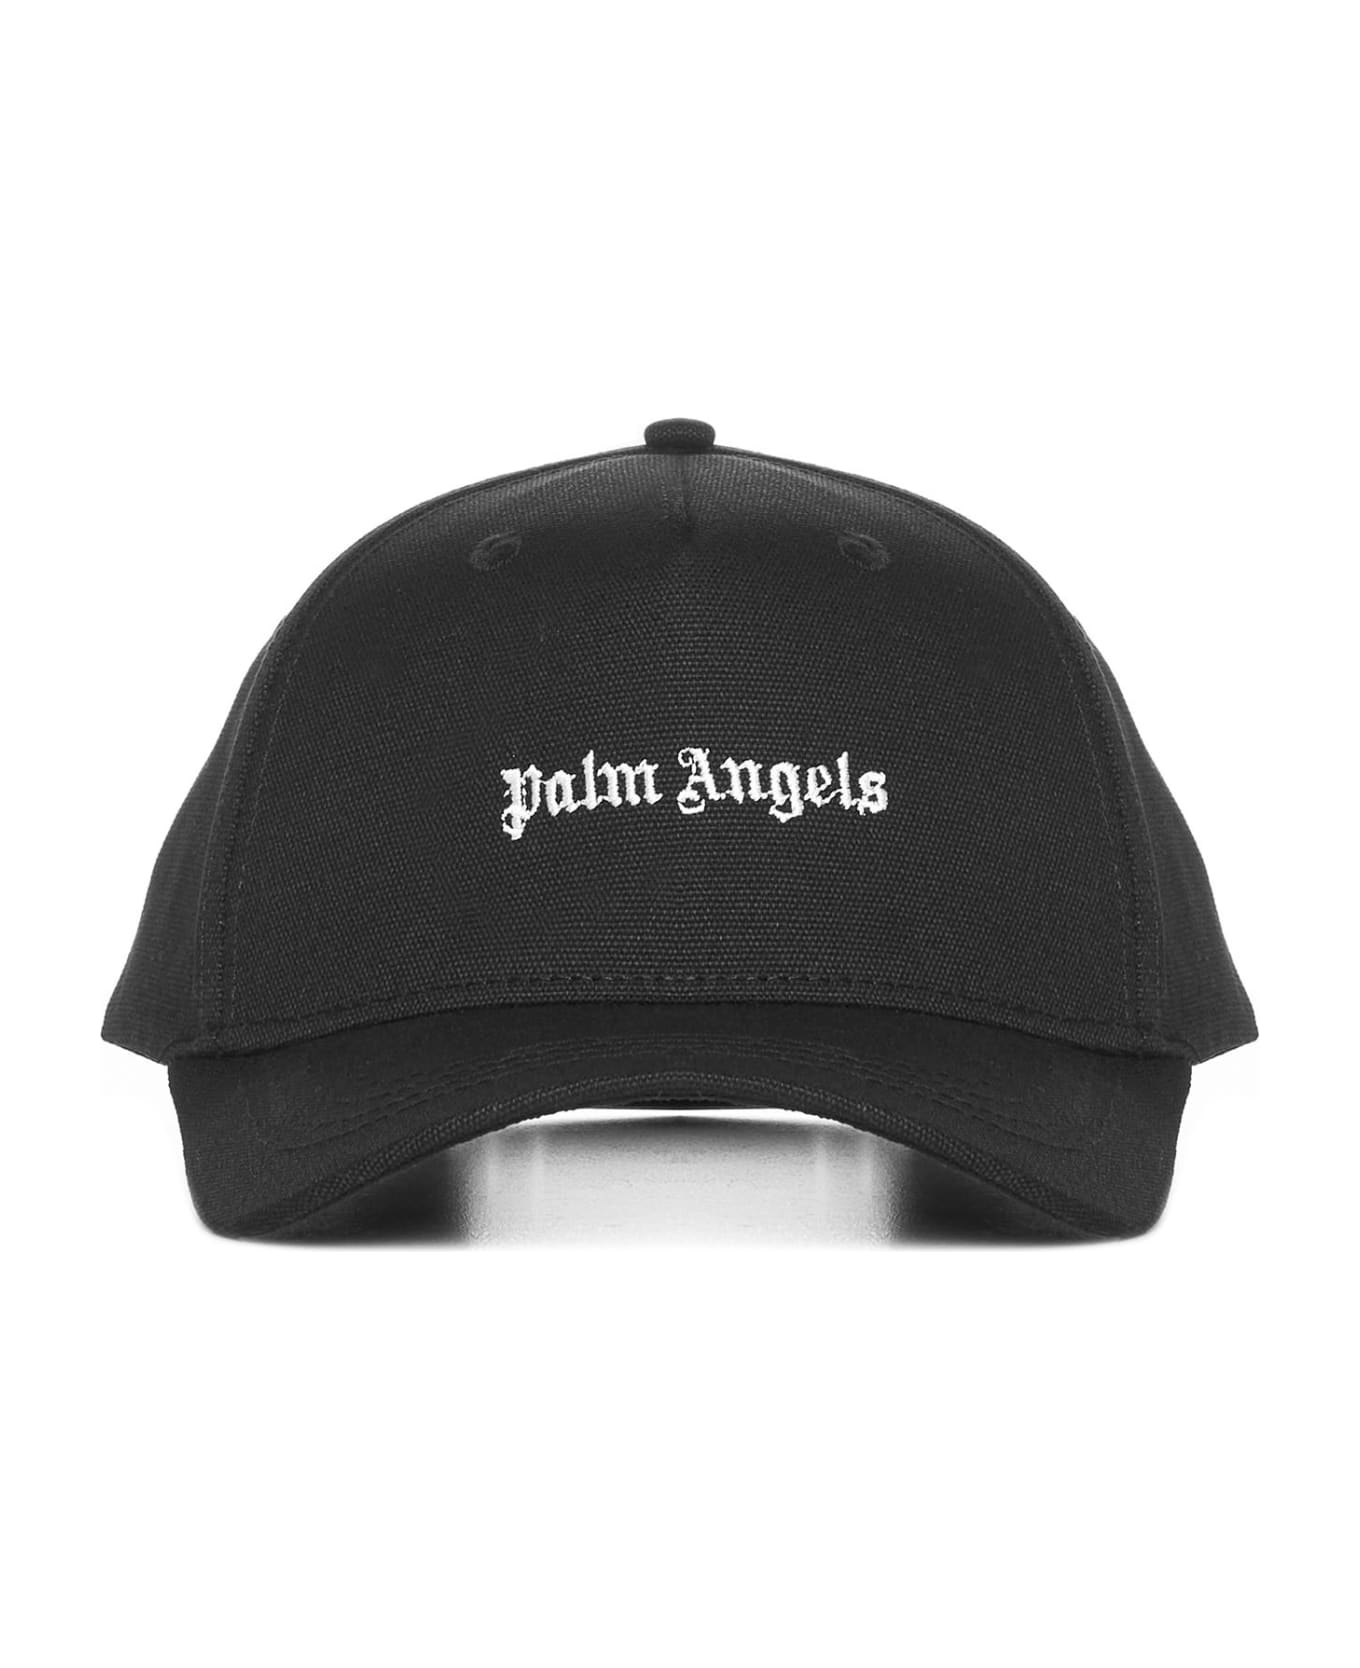 Palm Angels Hat - Black white